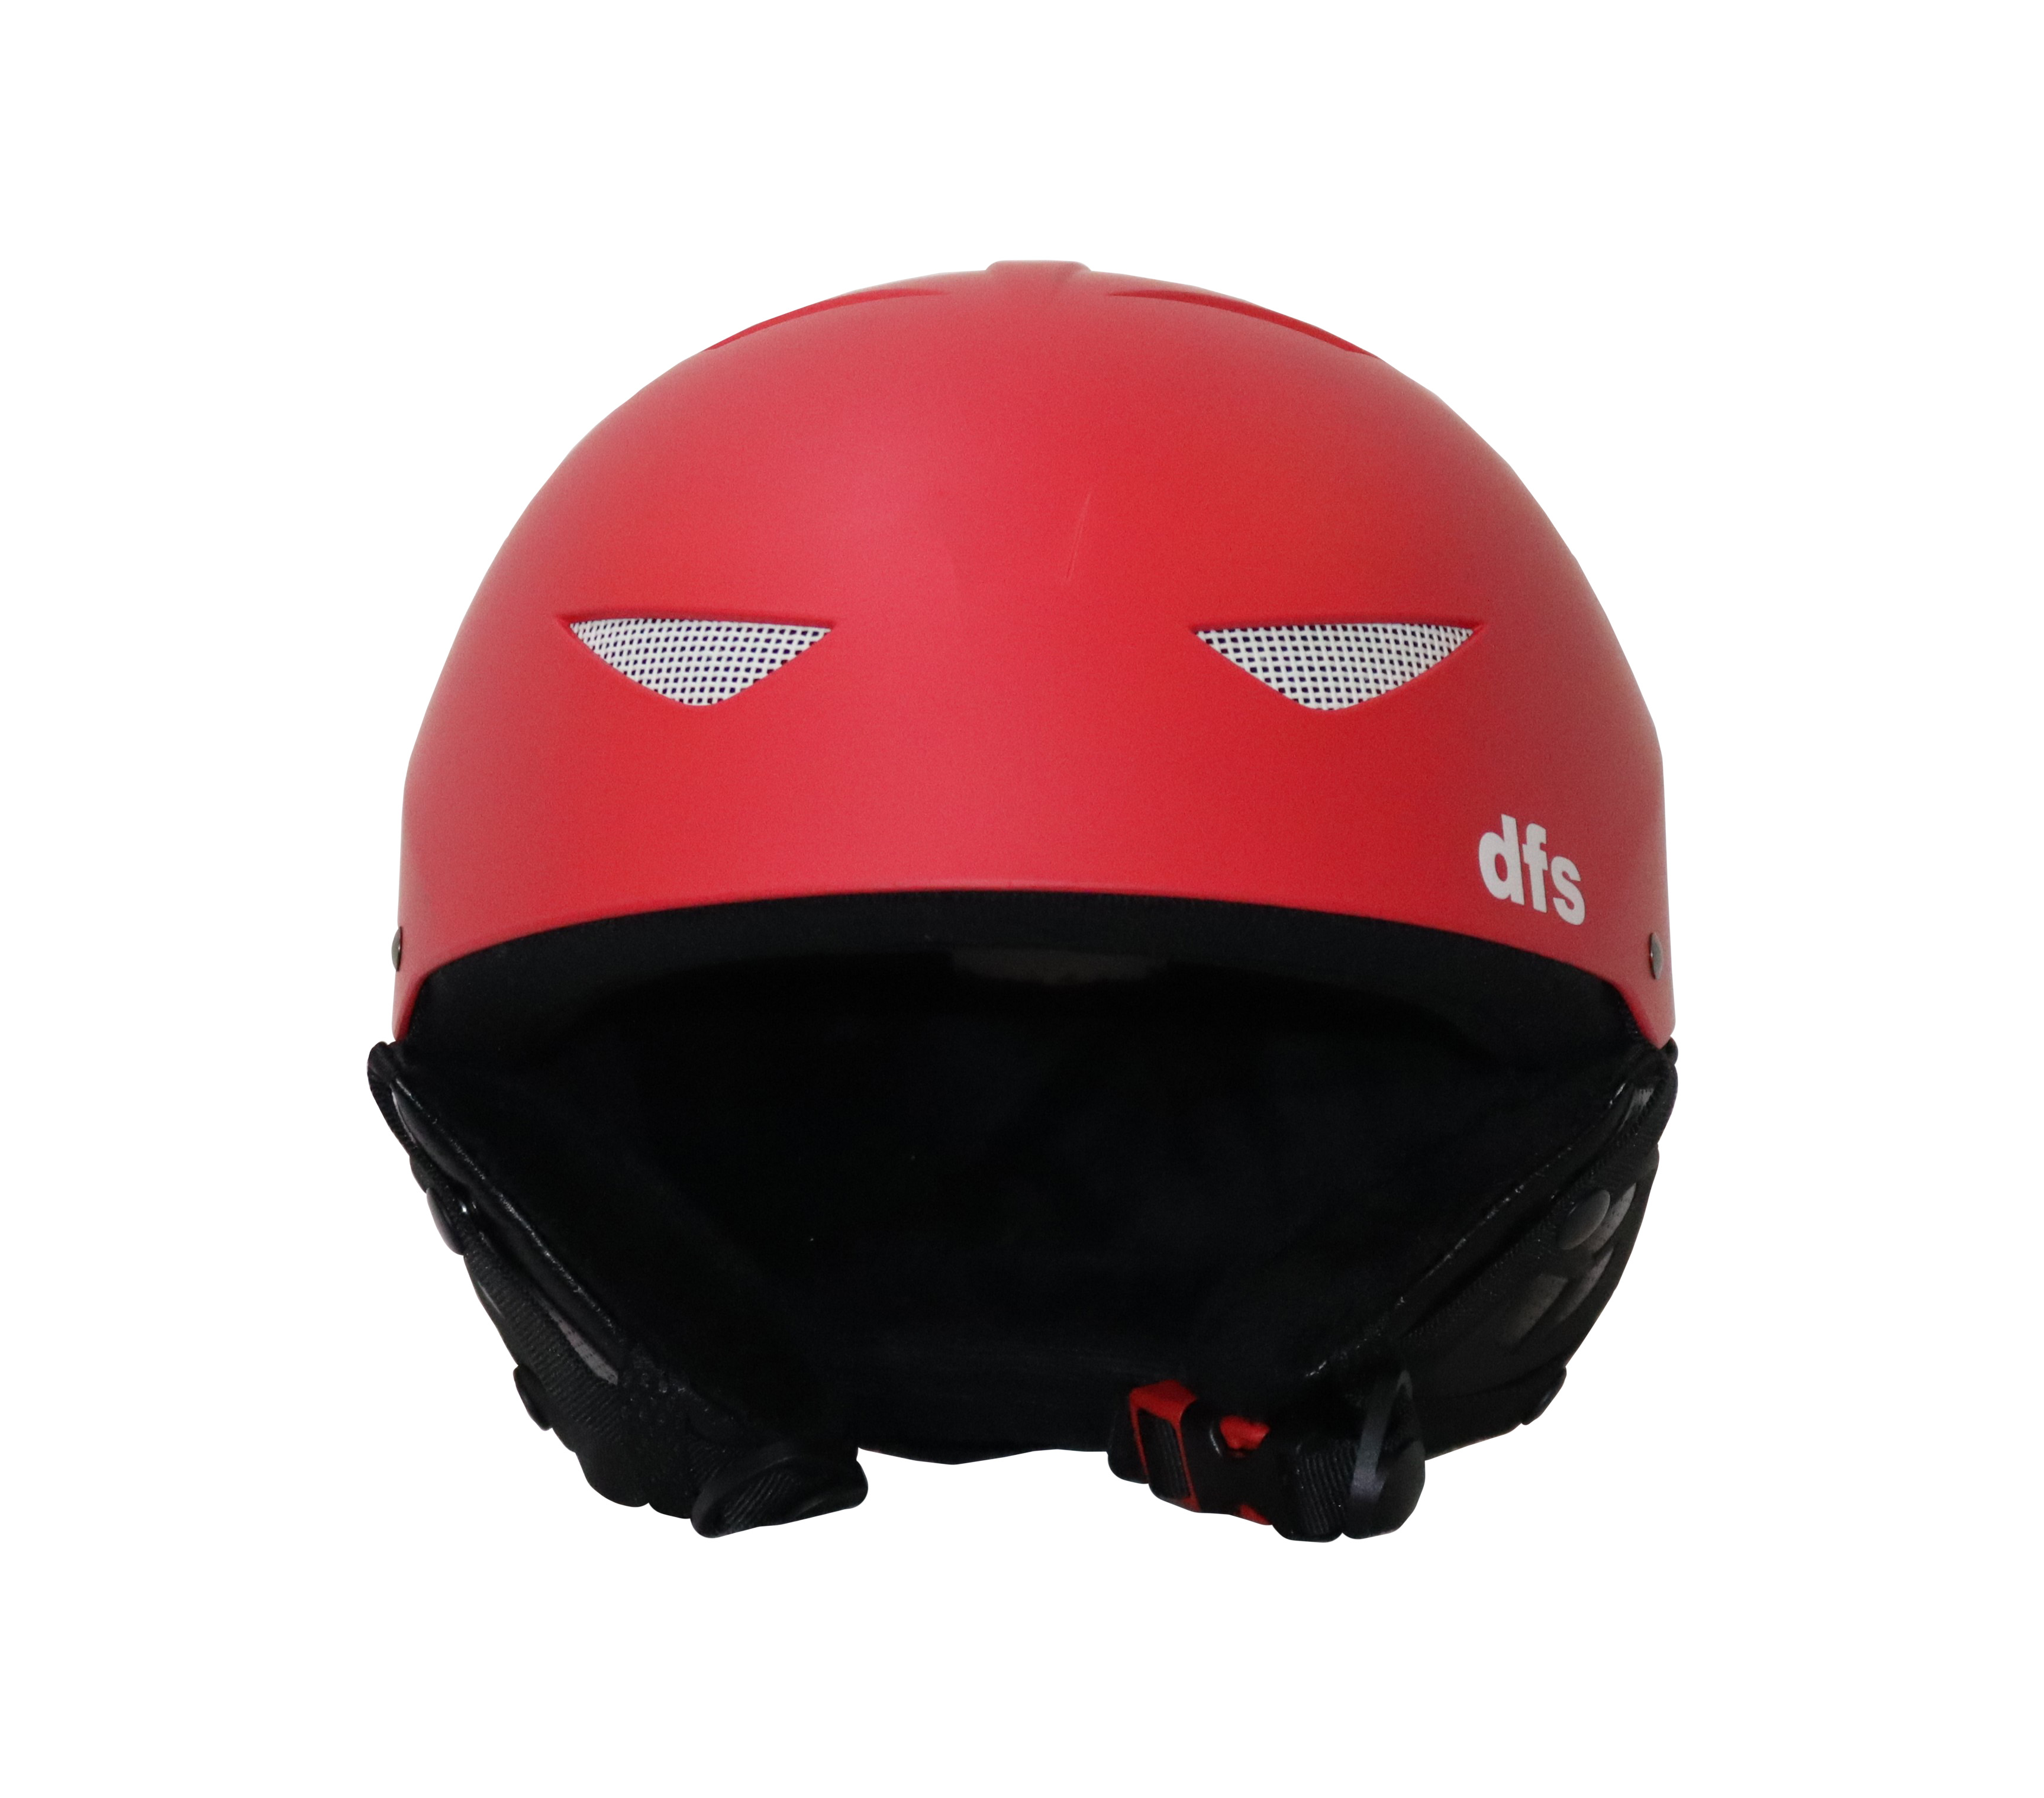 Шлем DFS Red, цвет красный, размер XL - фото 3